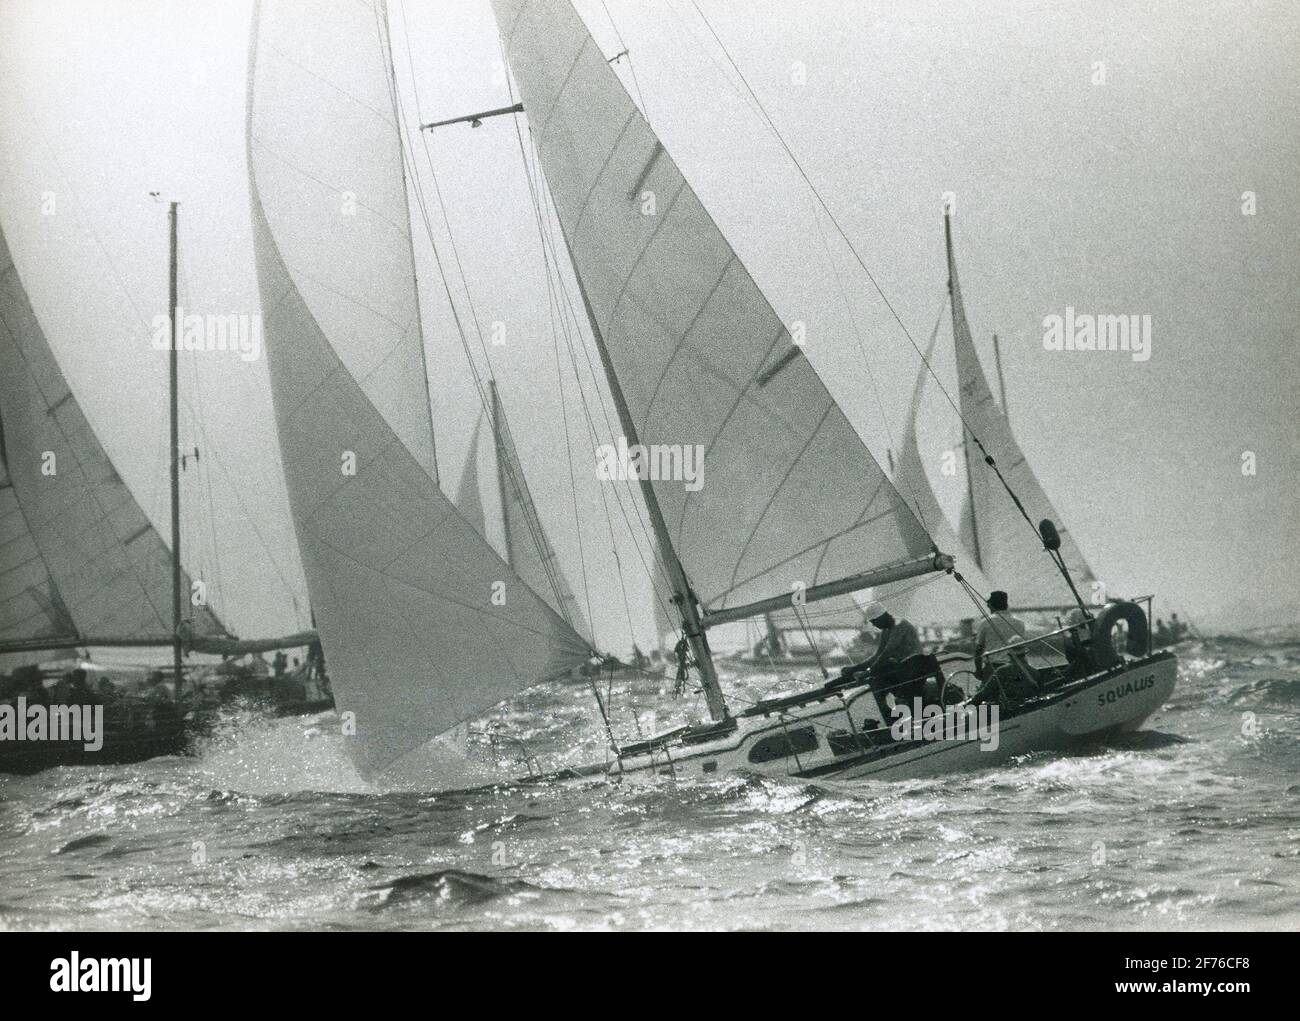 Lipton Cup sailboat racing in Biscayne Bay, Miami, Florida, Ca. 1960's. Stock Photo